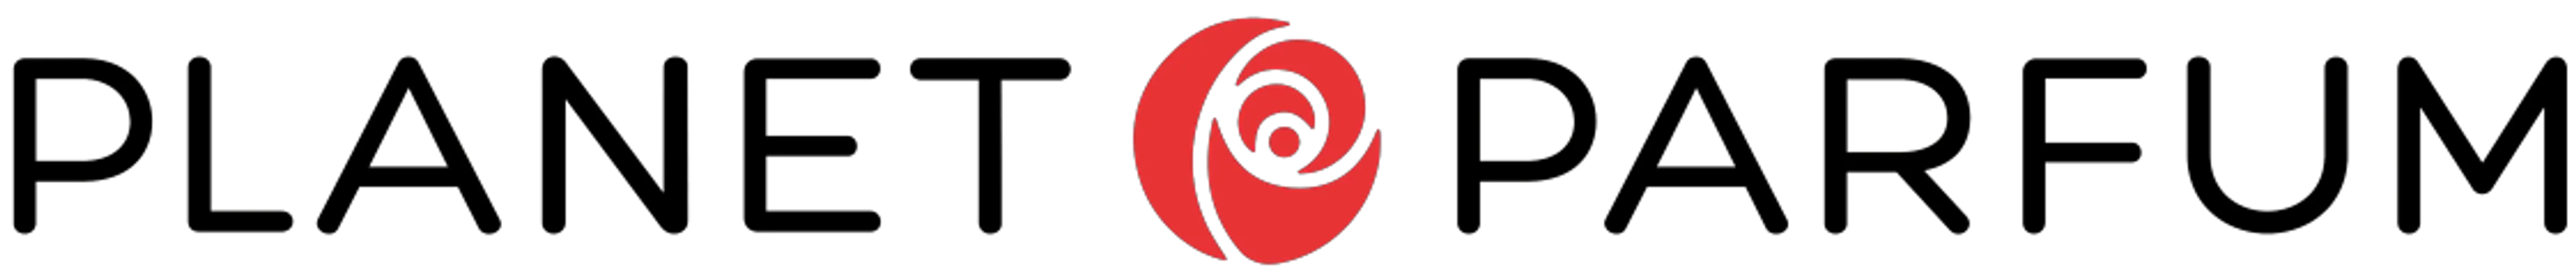 PLANET PARFUM logo